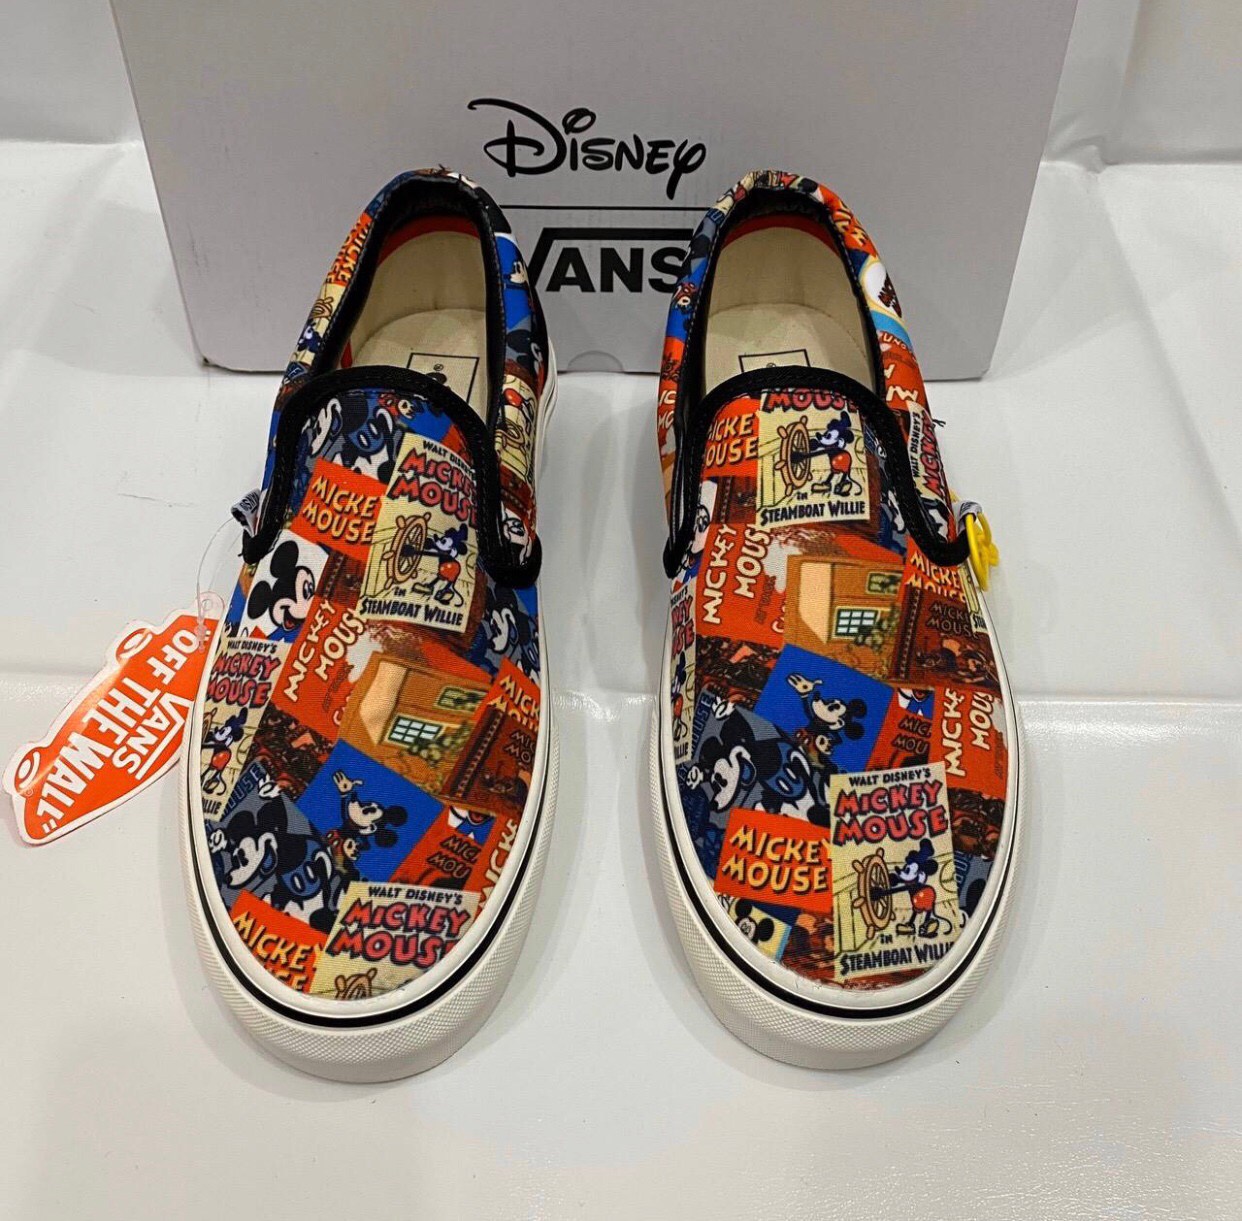 [MShose] รองเท้าVans Slip On - Disney x Micky Mouse ลายตาราง รองเท้าลำลอง รองเท้าแฟชั่น สินค้าพร้อมกล่อง